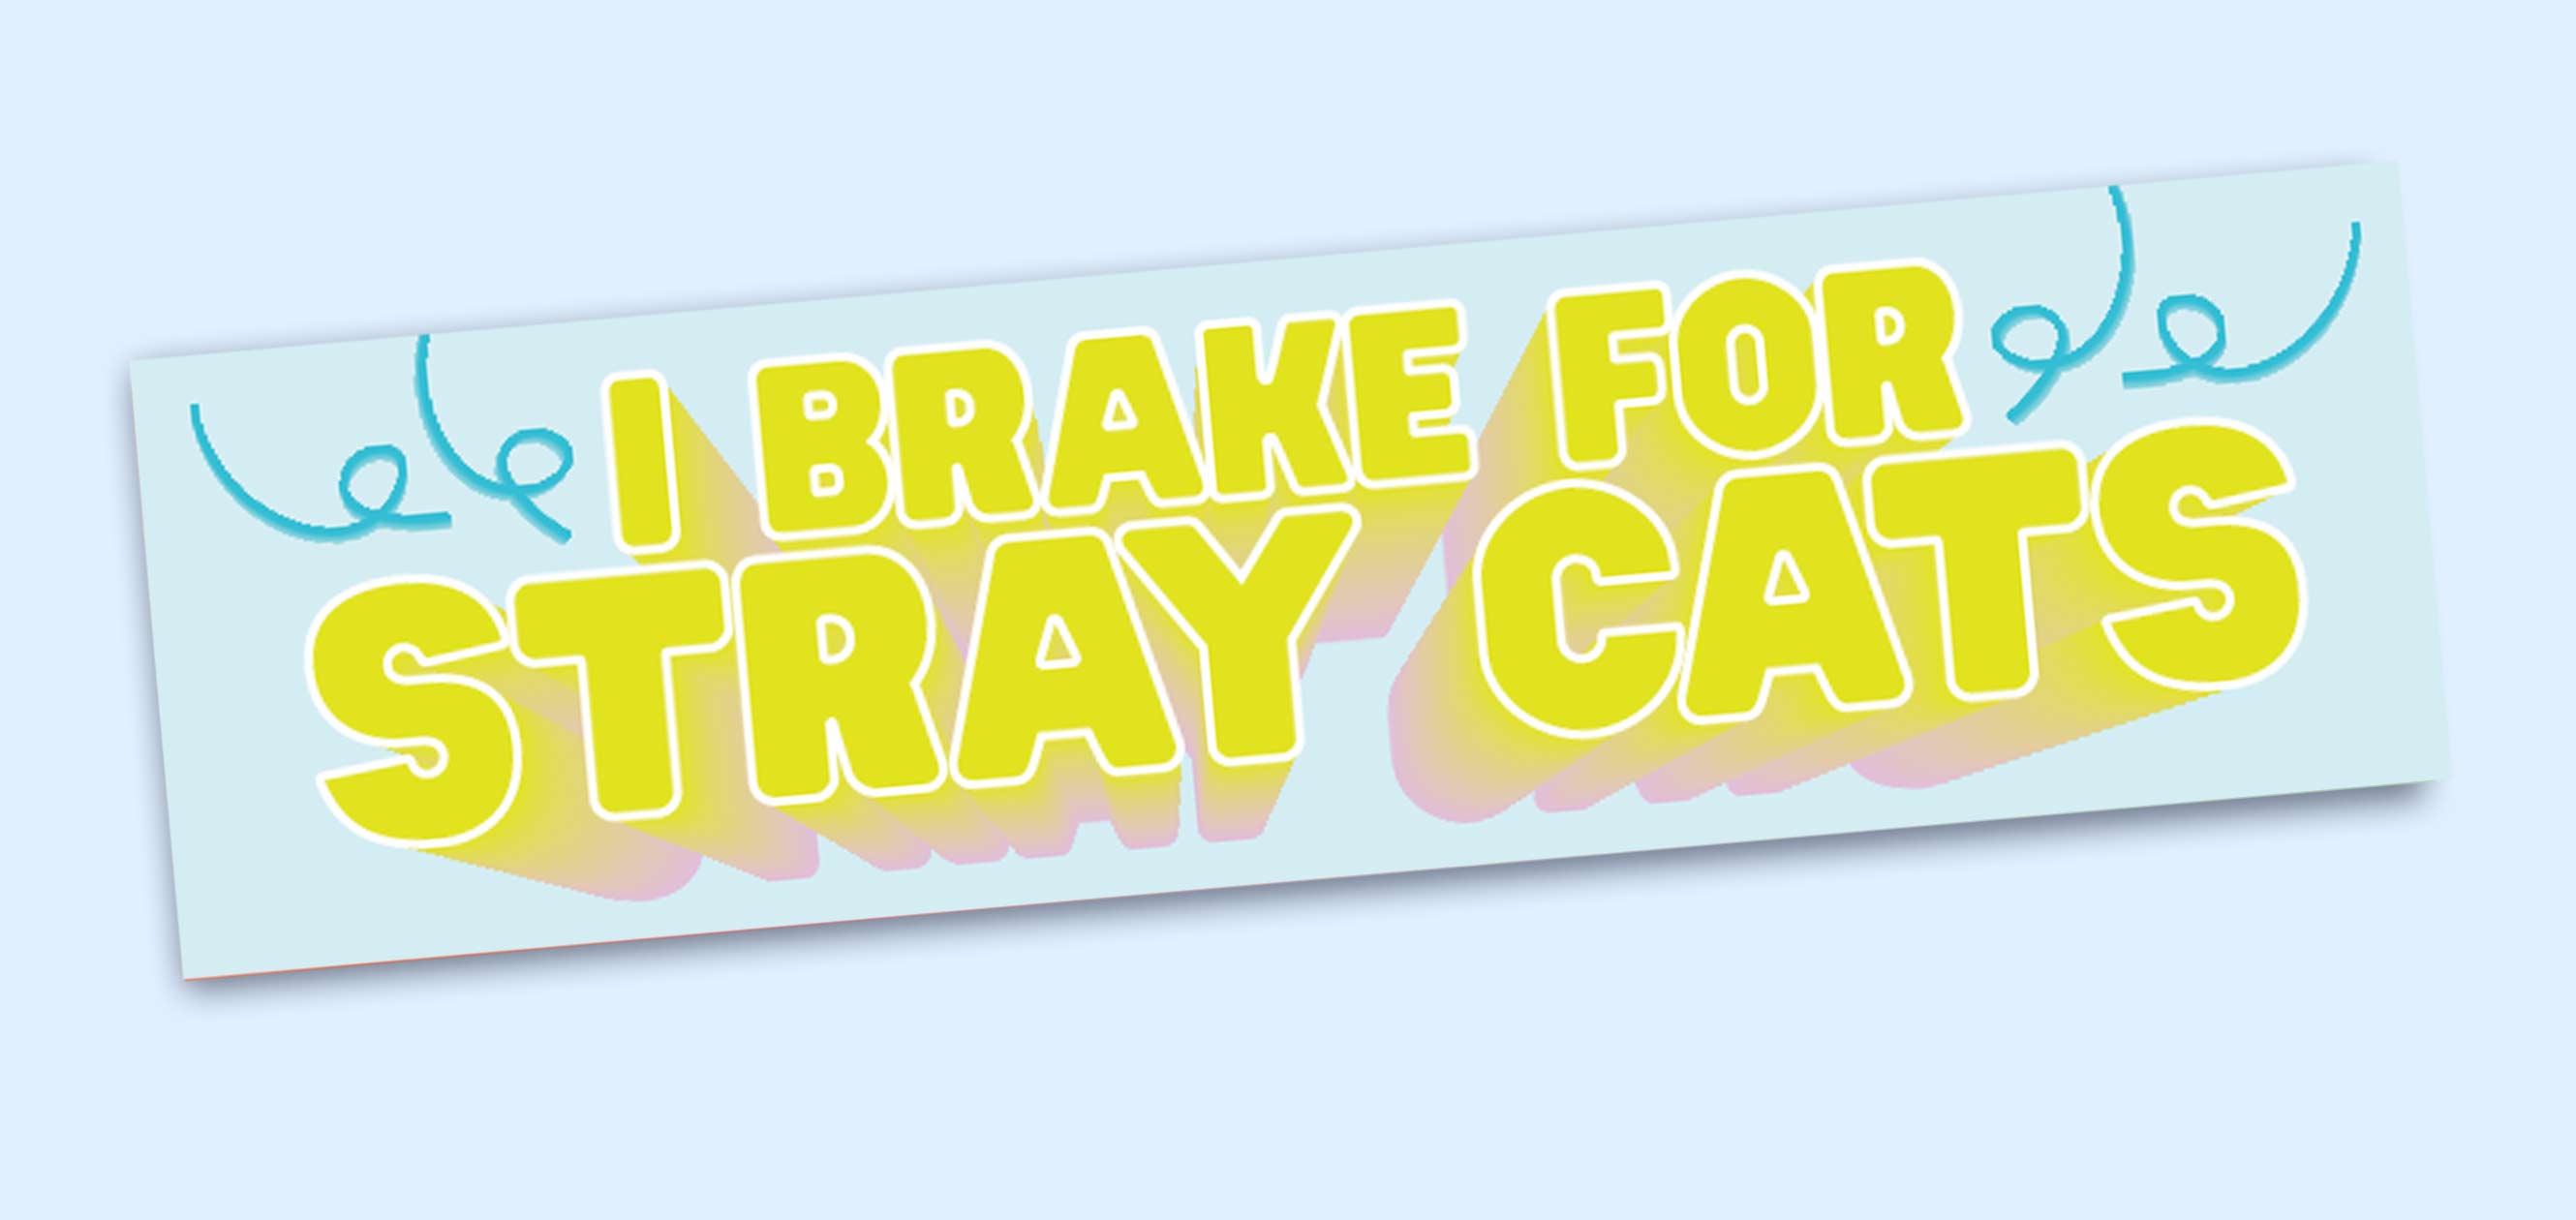 I Brake for Stray Cats Bumper Sticker